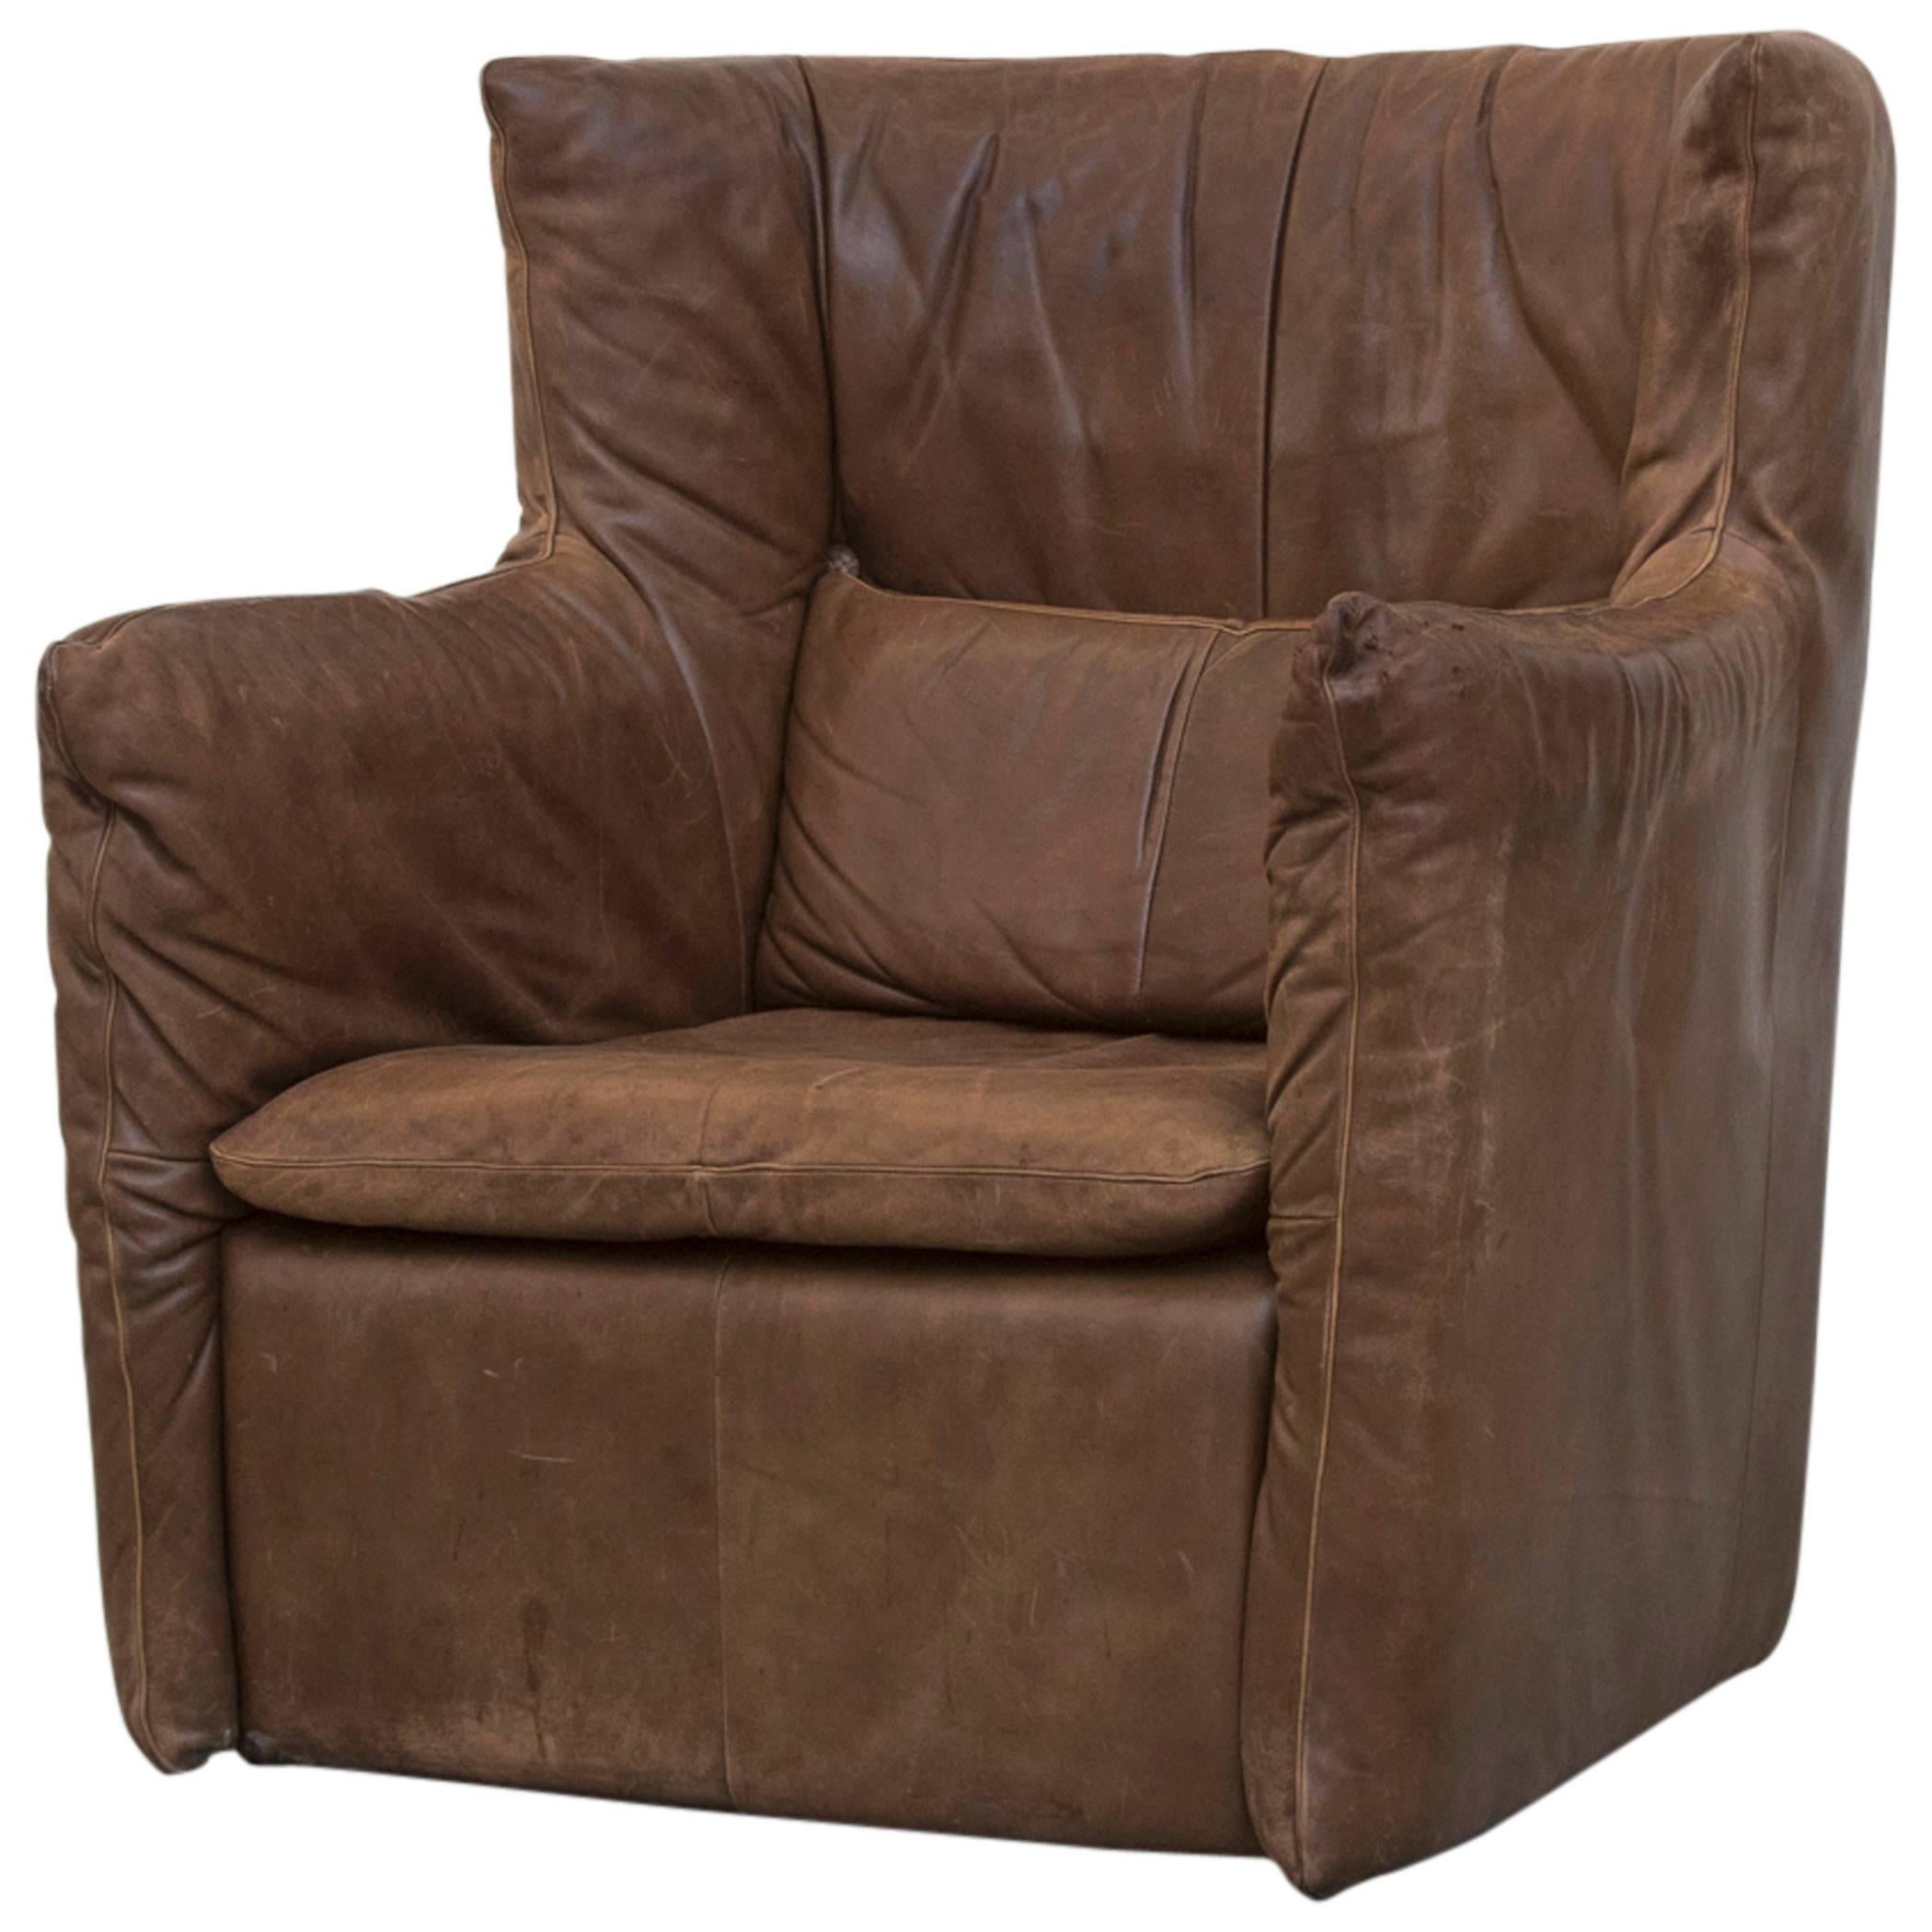 Gerard van Den Berg Leather Lounge Chair